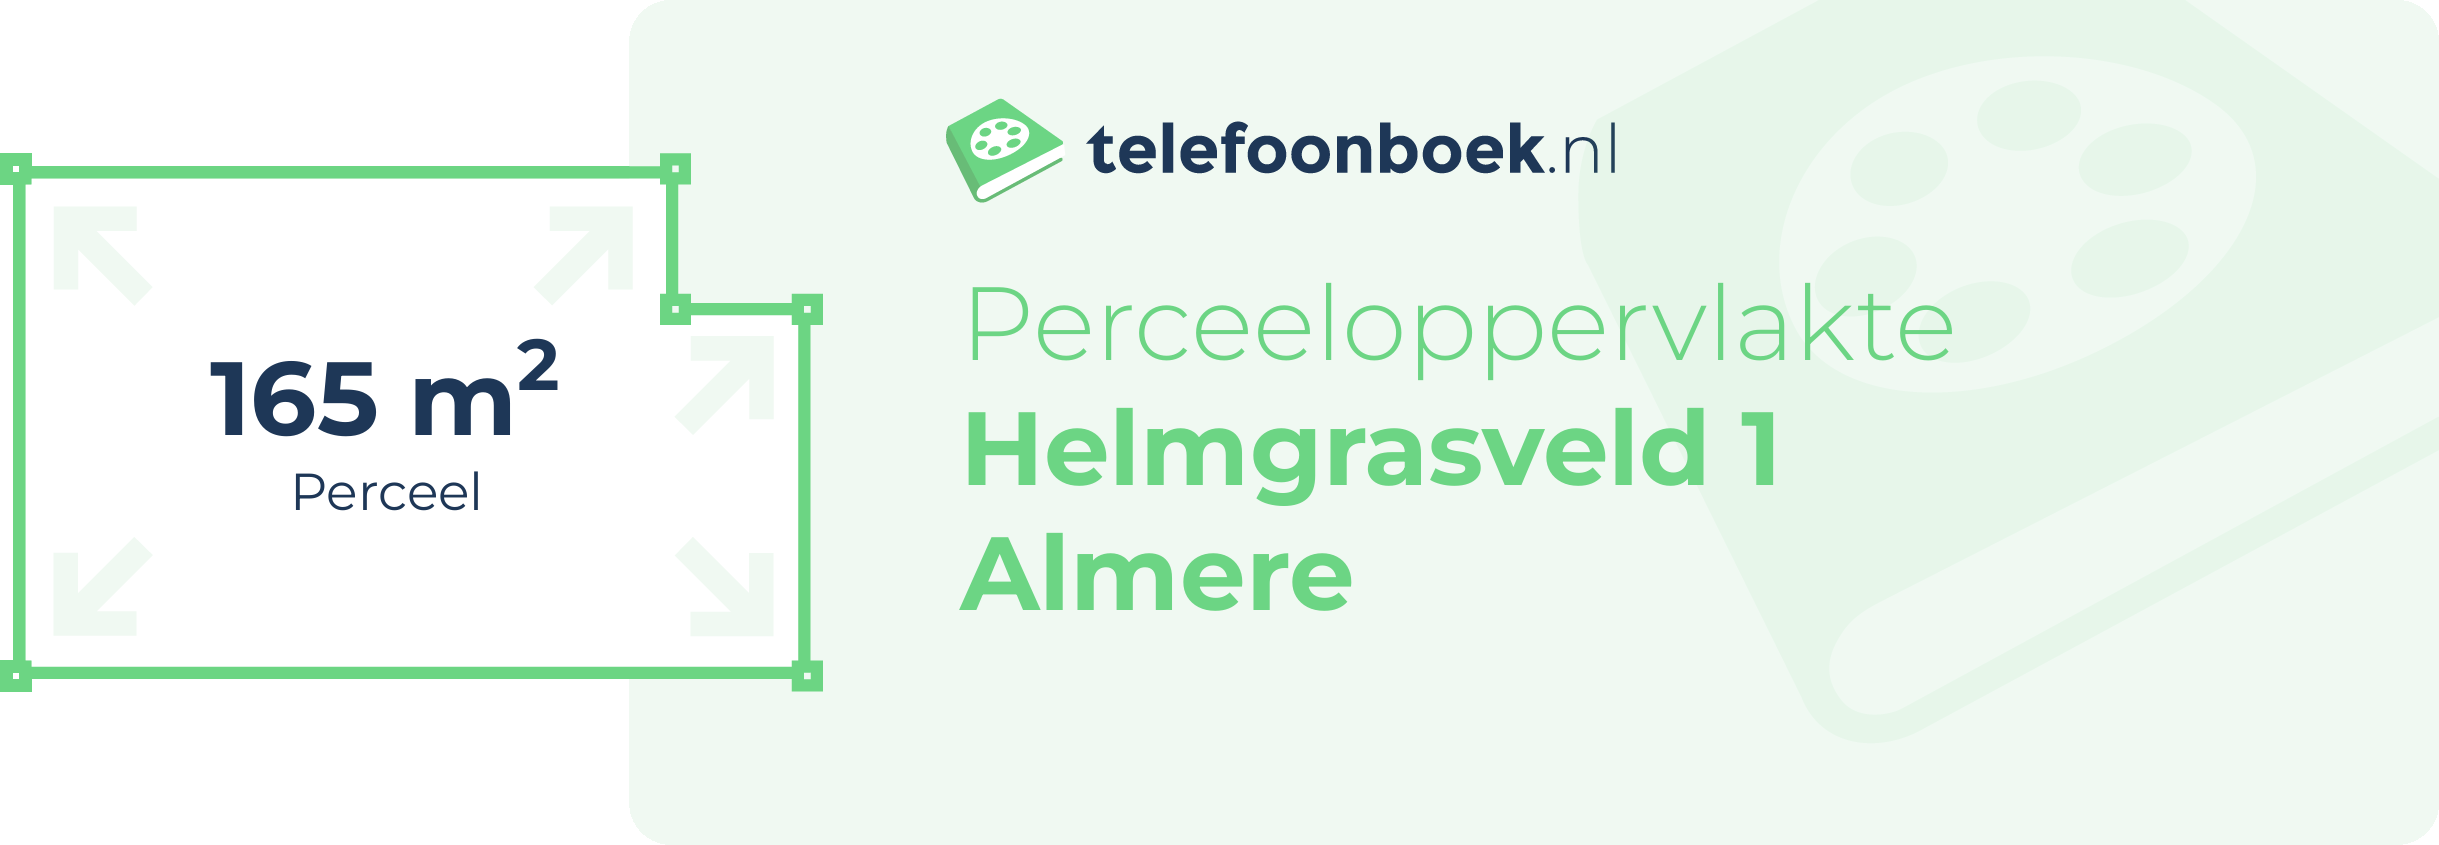 Perceeloppervlakte Helmgrasveld 1 Almere